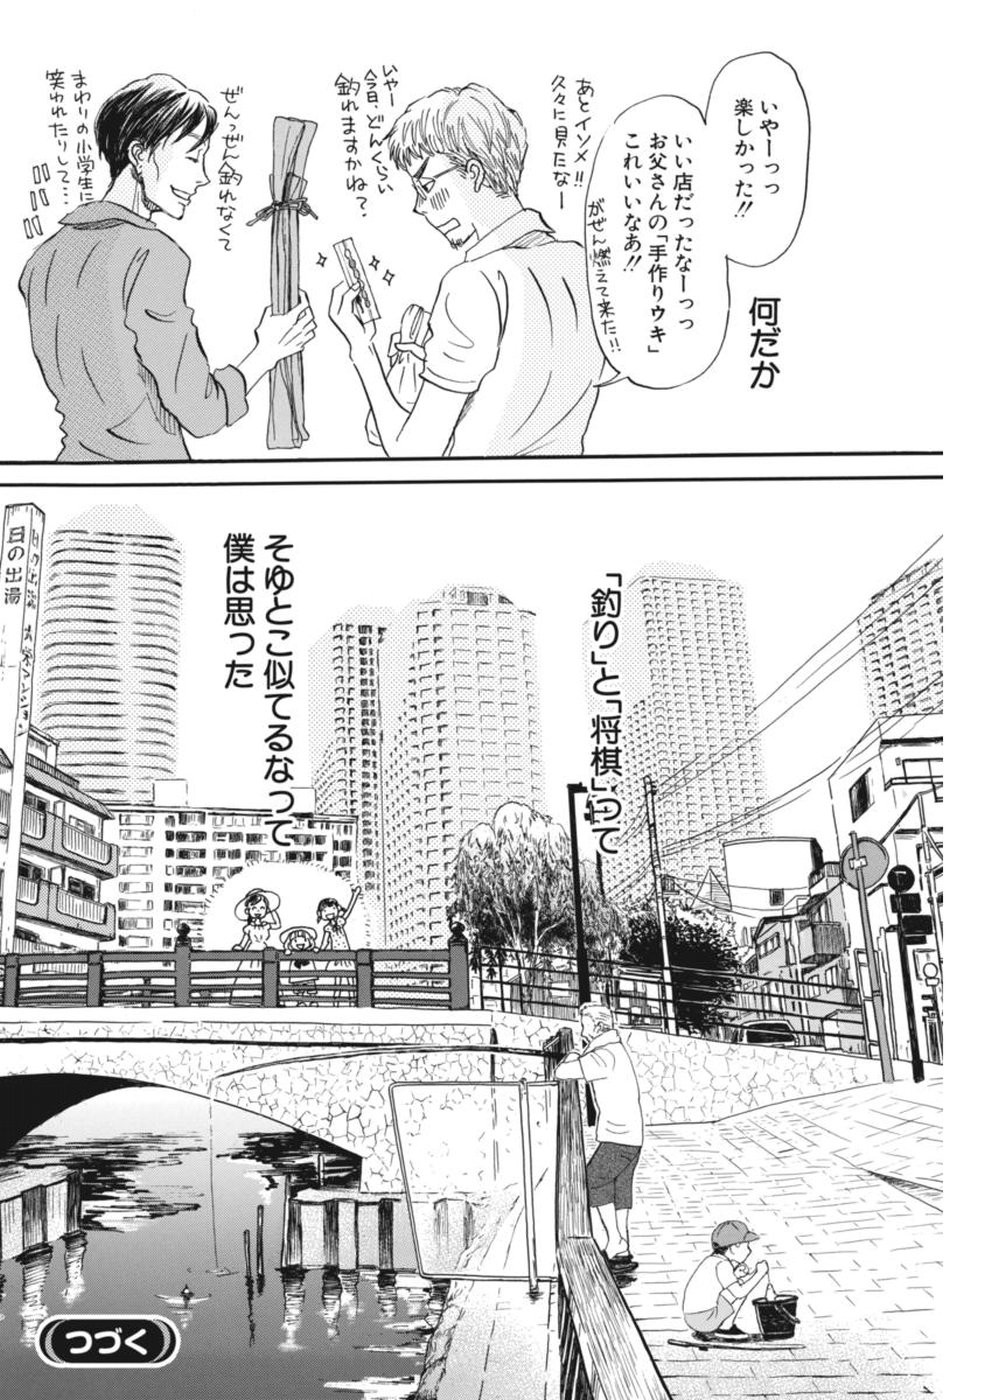 3 Gatsu no Lion - Chapter 143 - Page 12